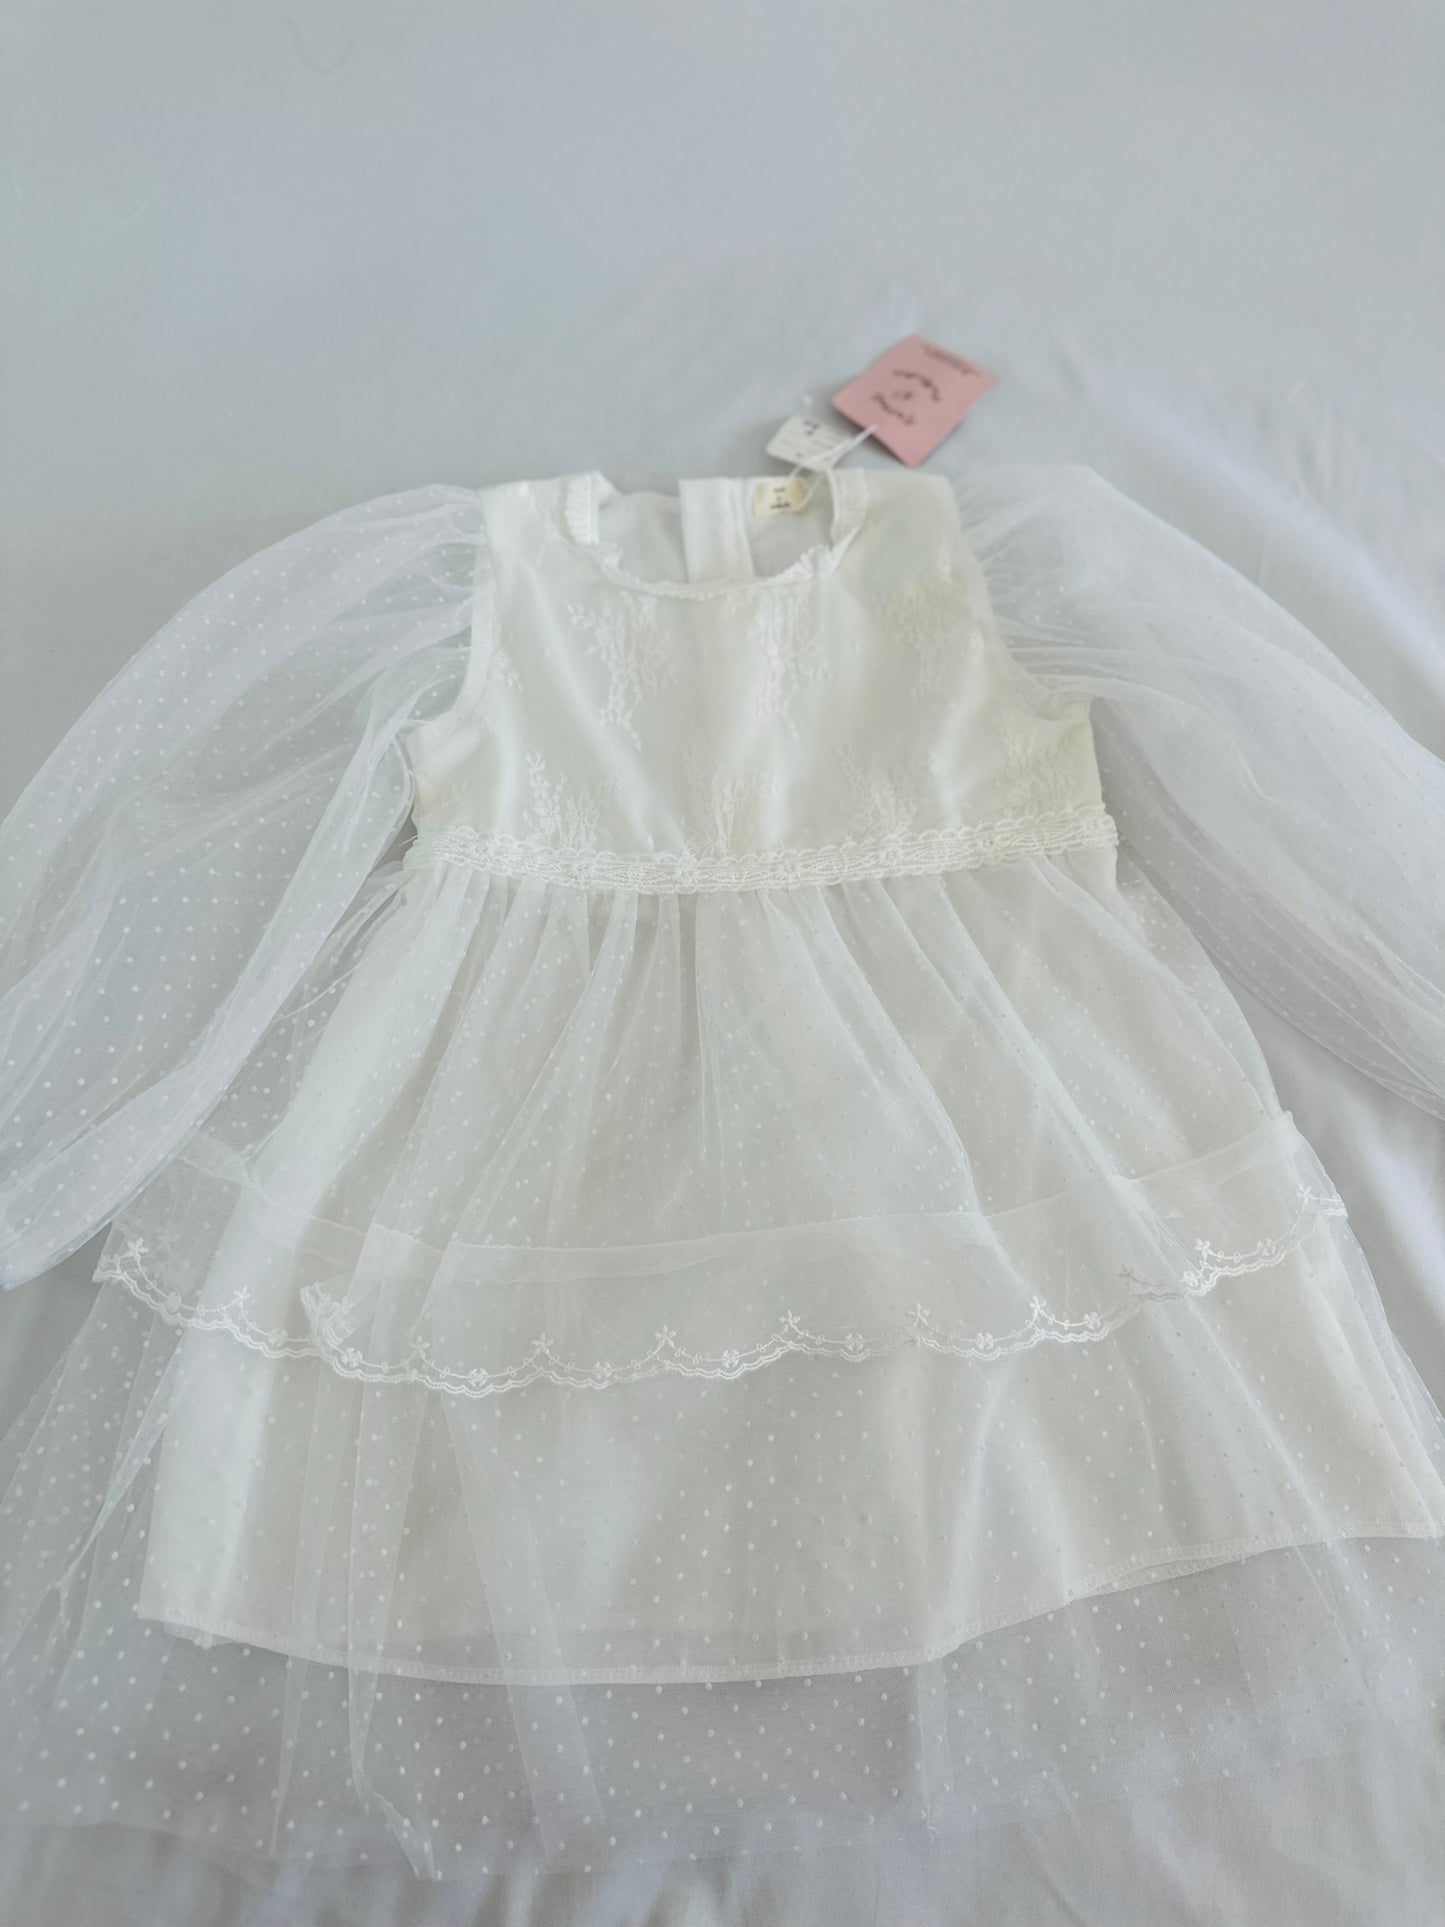 Adorable soft net white dress